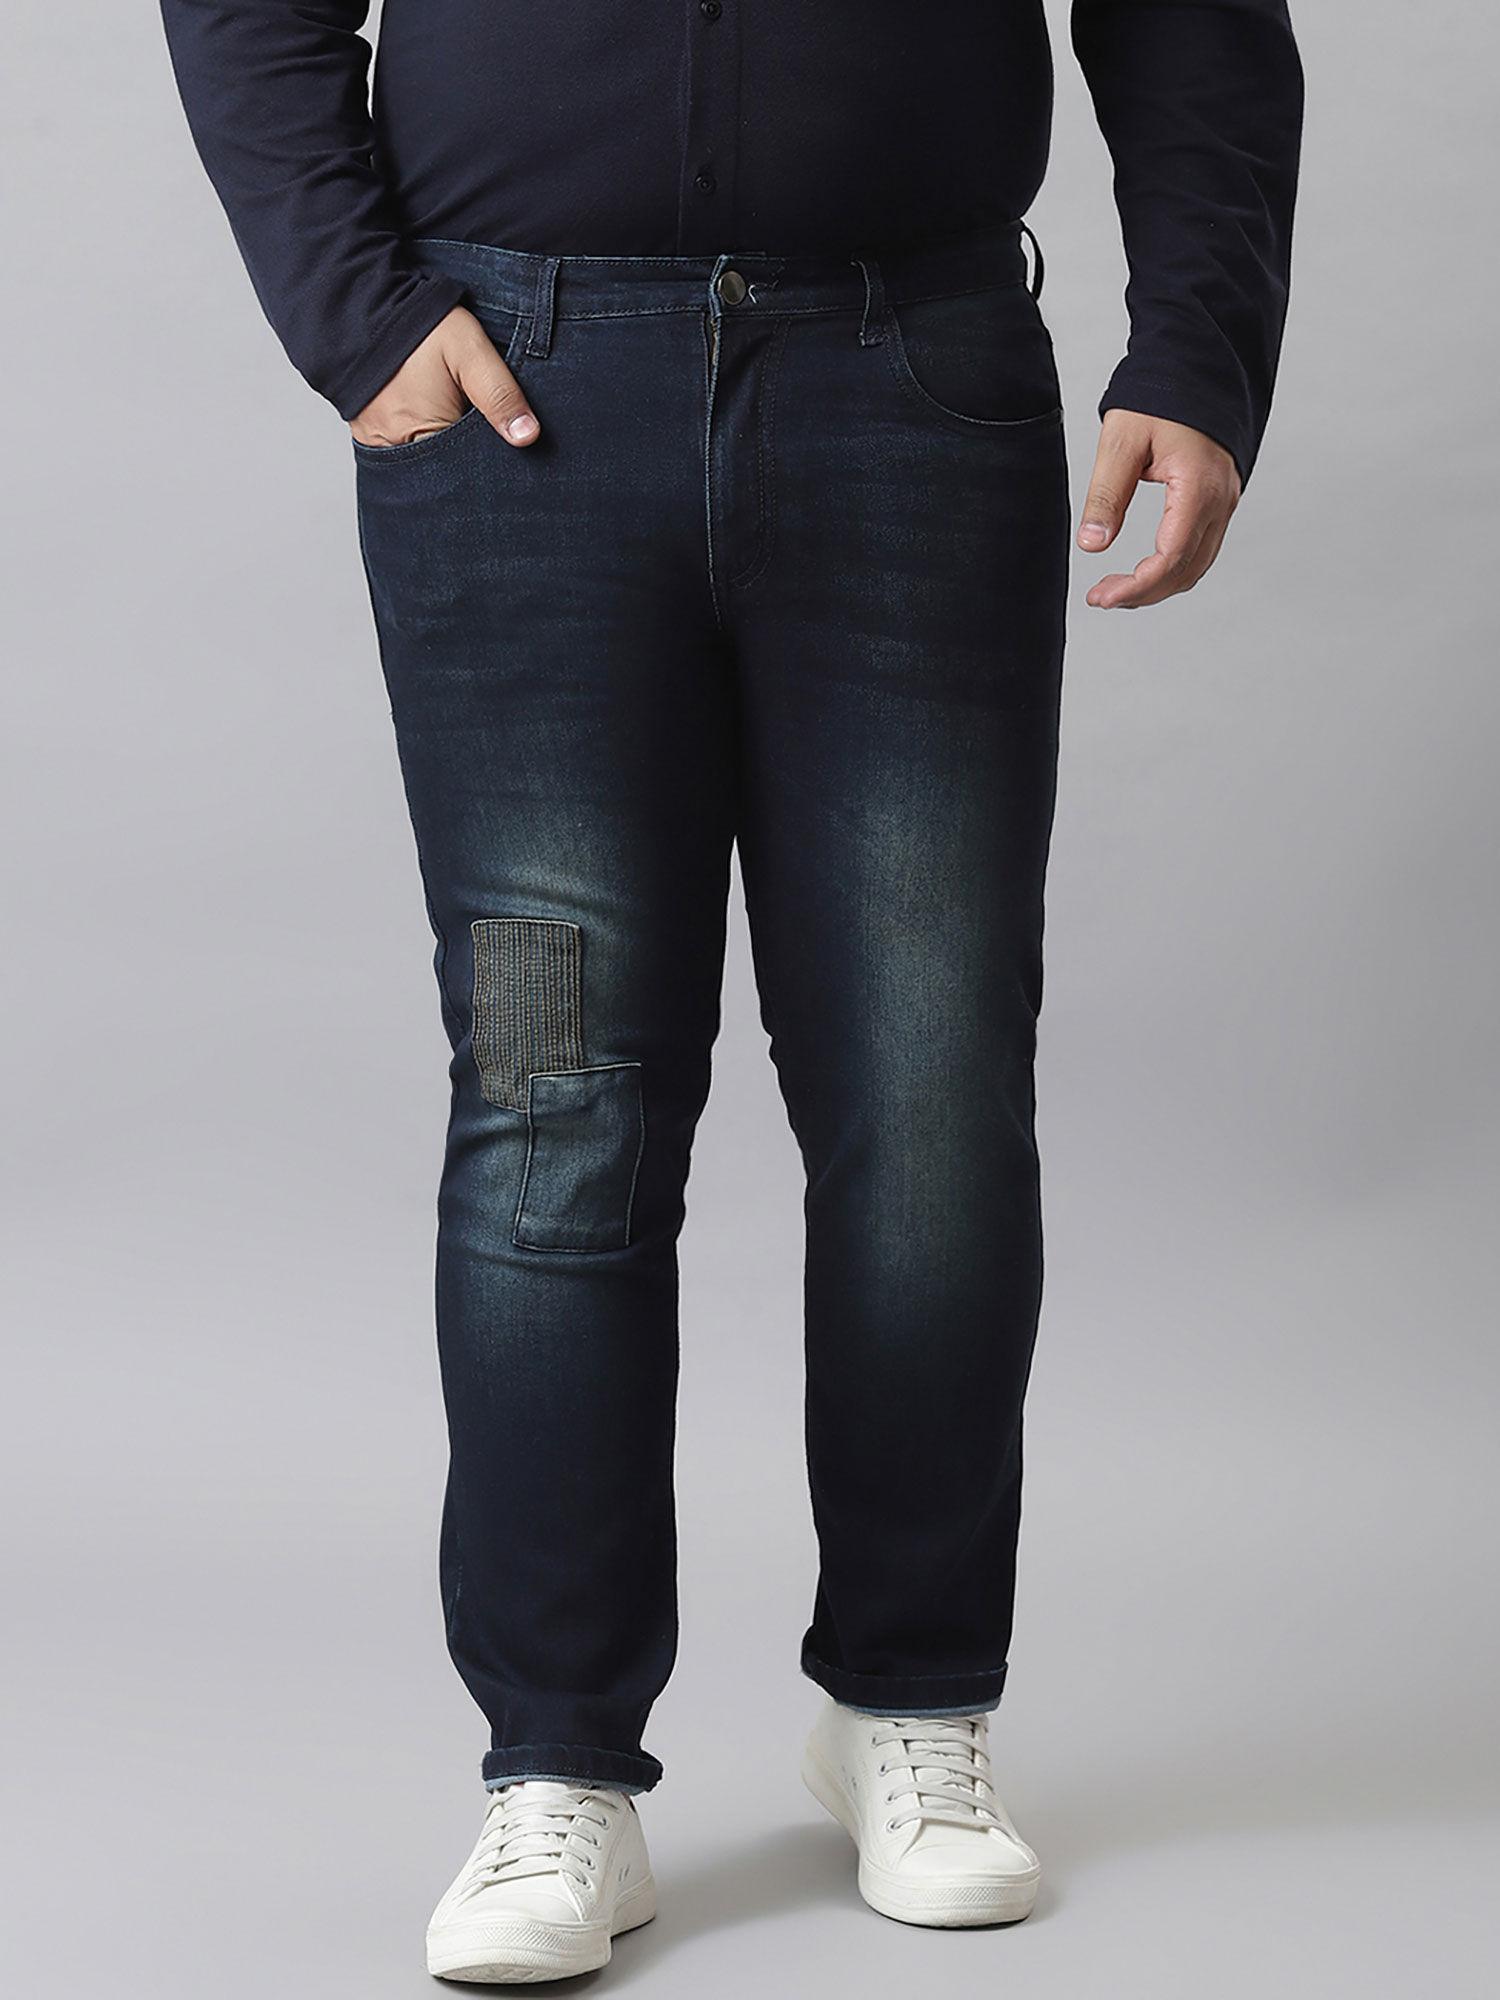 men-self-design-stylish-casual-denim-jeans